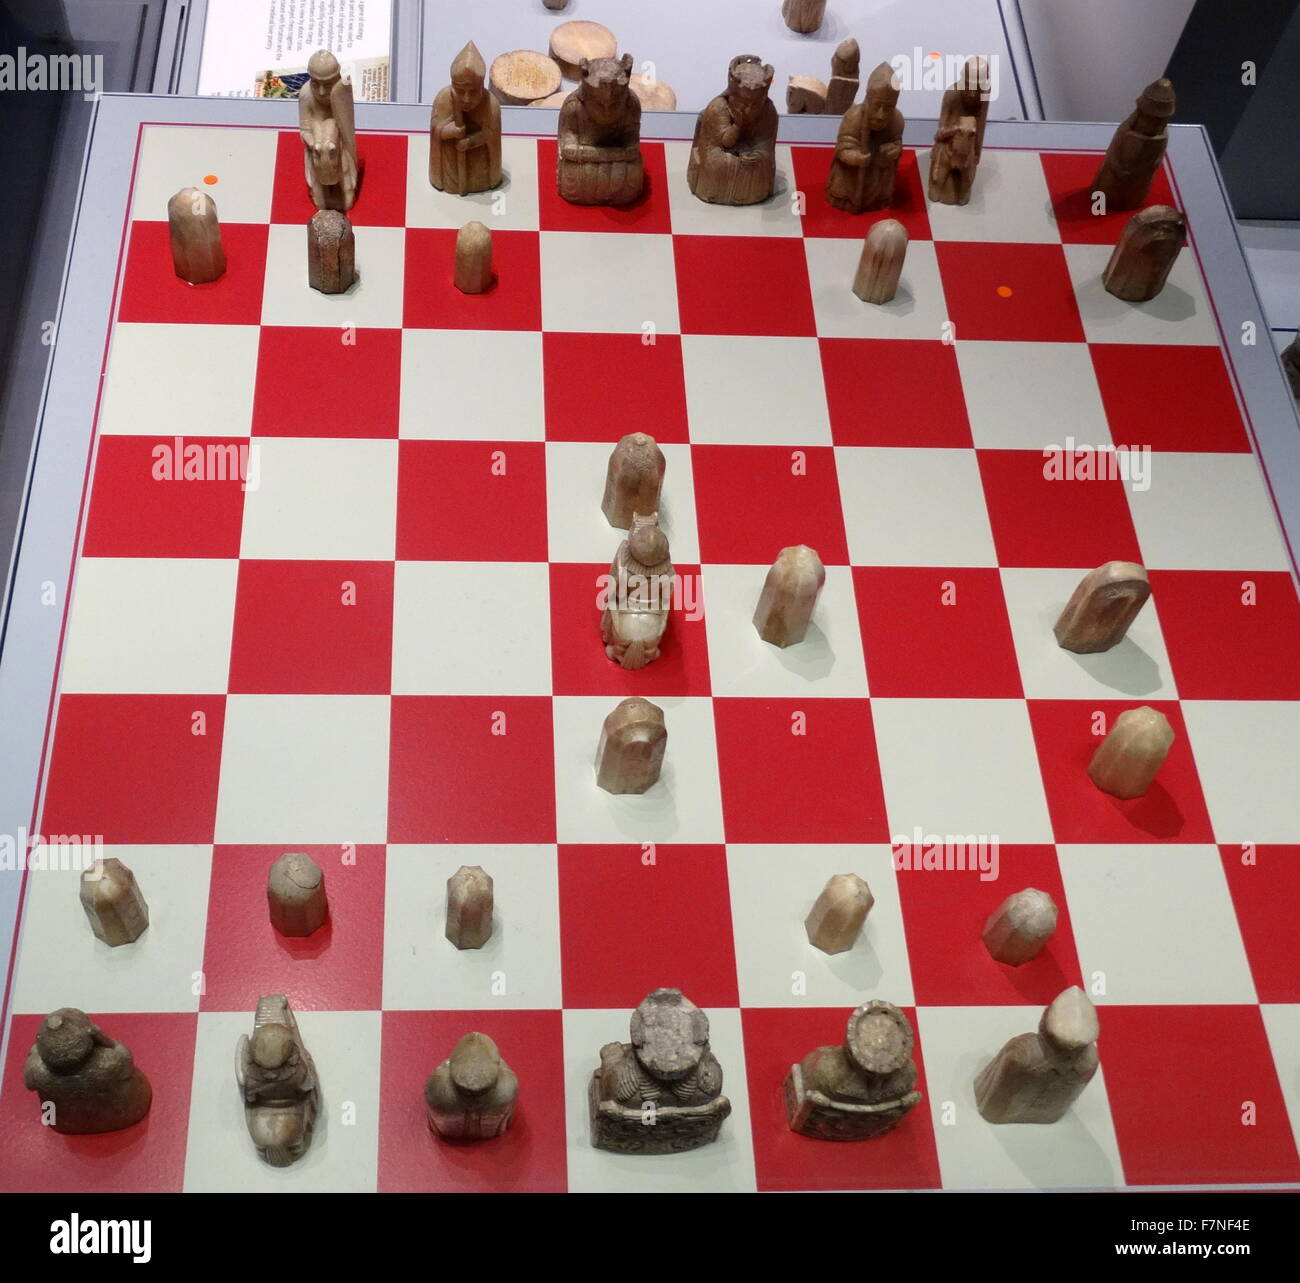 El ajedrez de Lucas